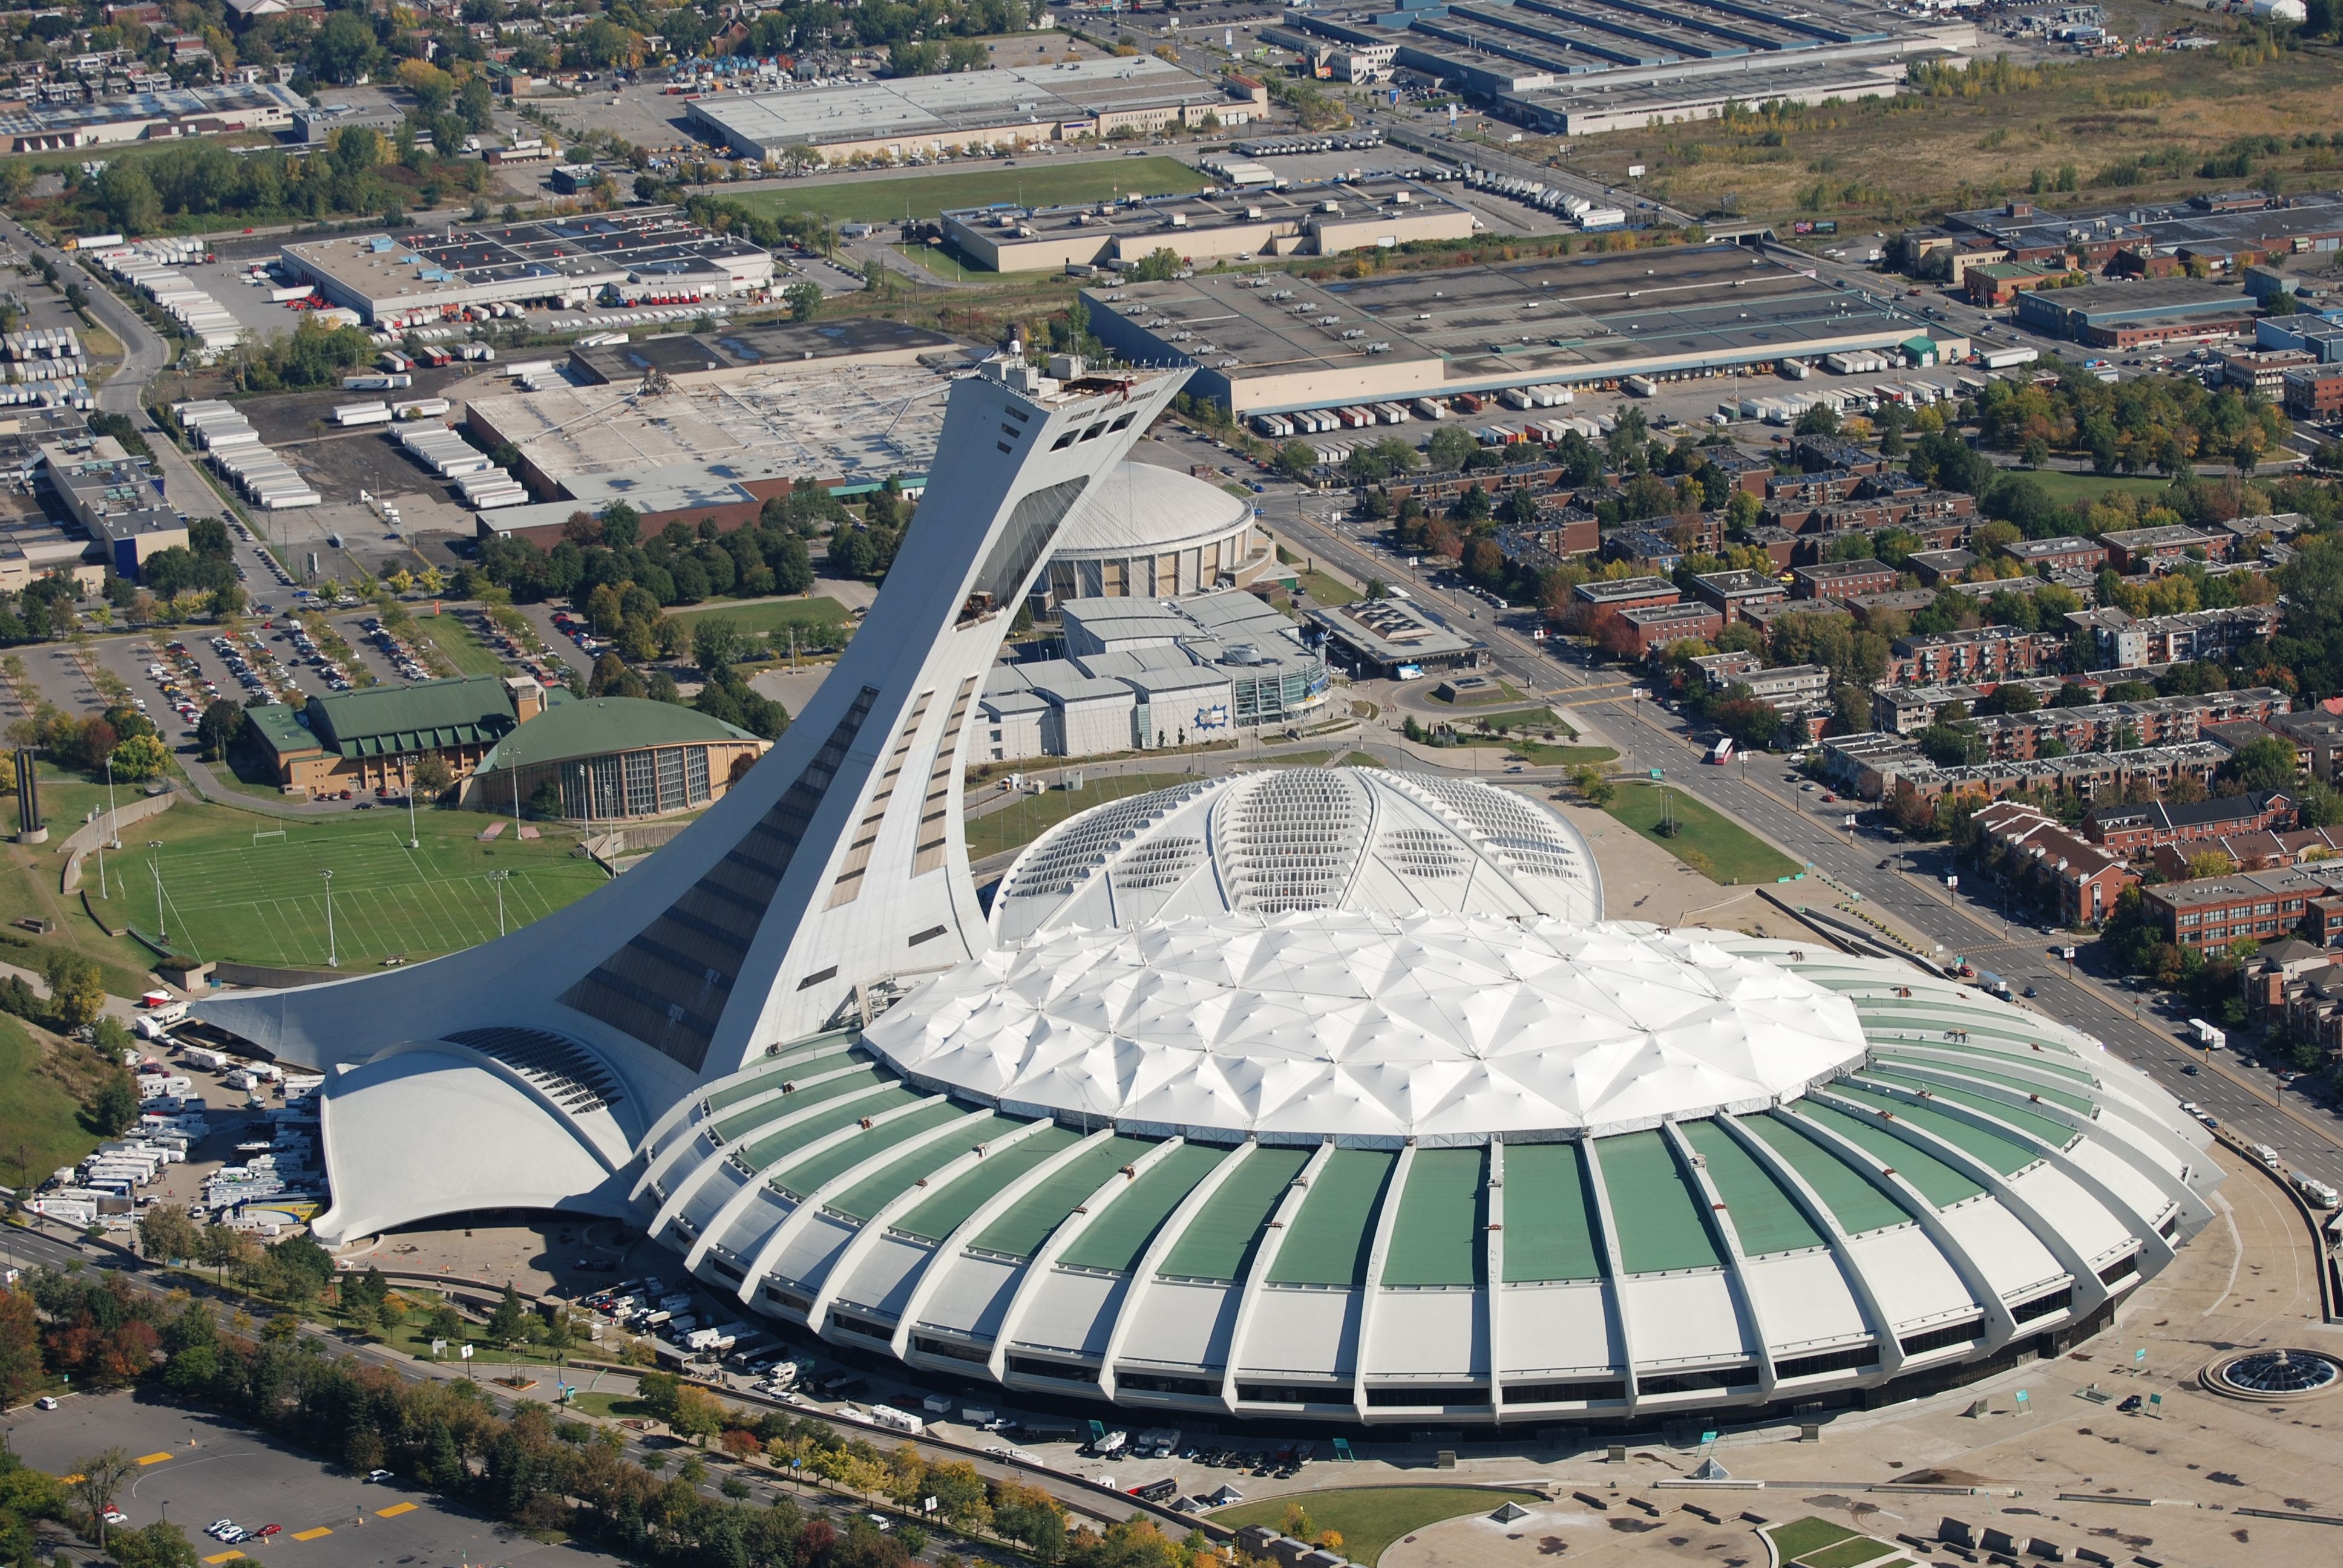 Olympic stadium. Олимпийский стадион в Монреале. Олимпийский парк Монреаль. Stade Olympique Монреаль. Олимпийский стадион Монреаль 1976.